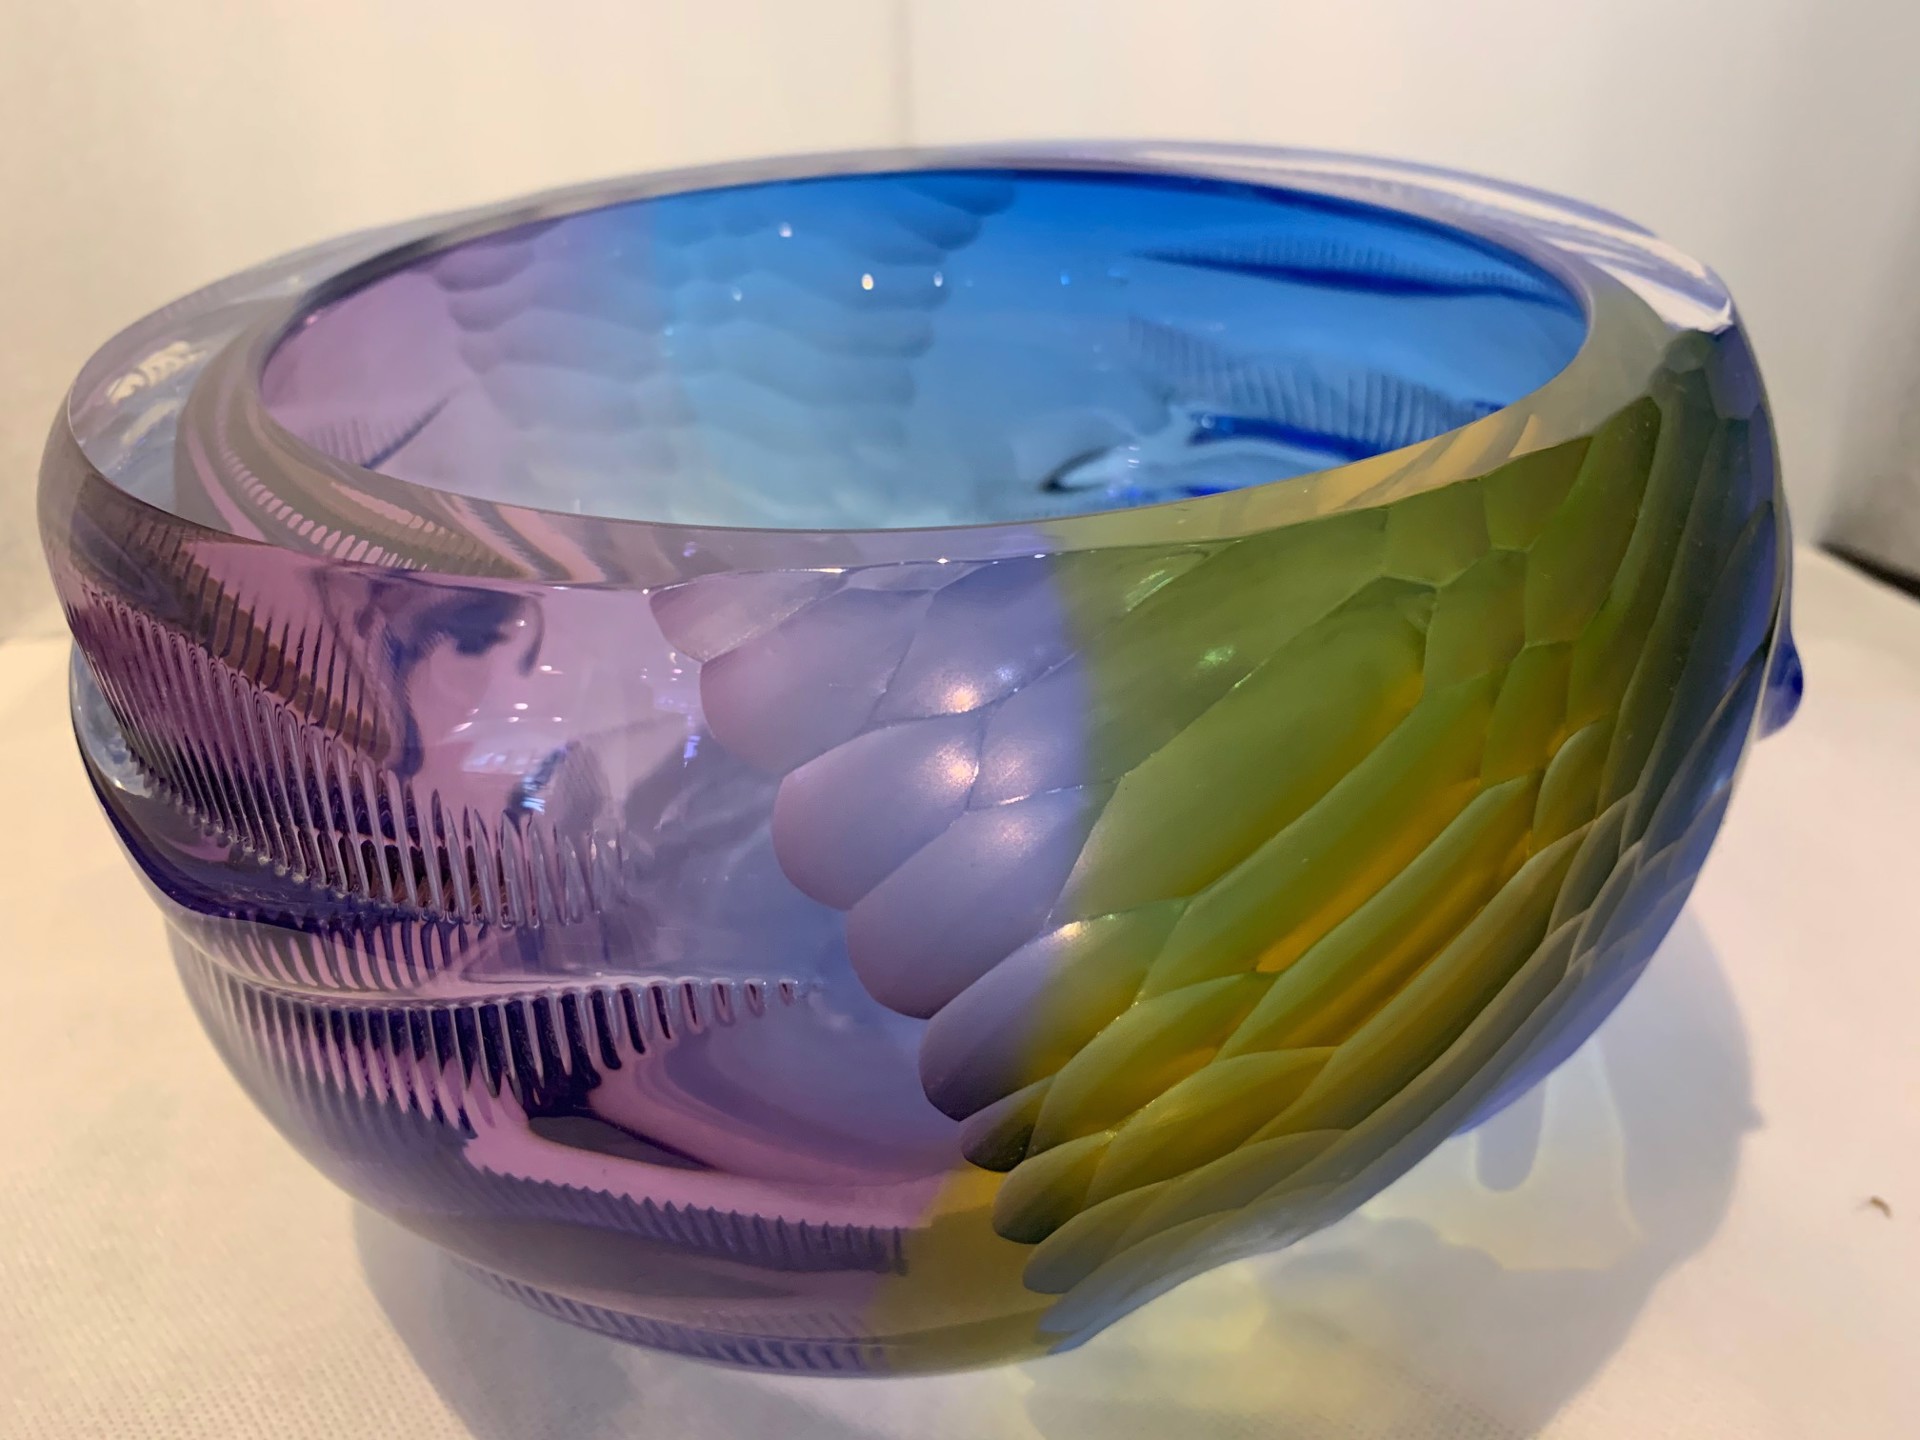 Texture Bowl #5 (Blue & Plum) by Leon Applebaum